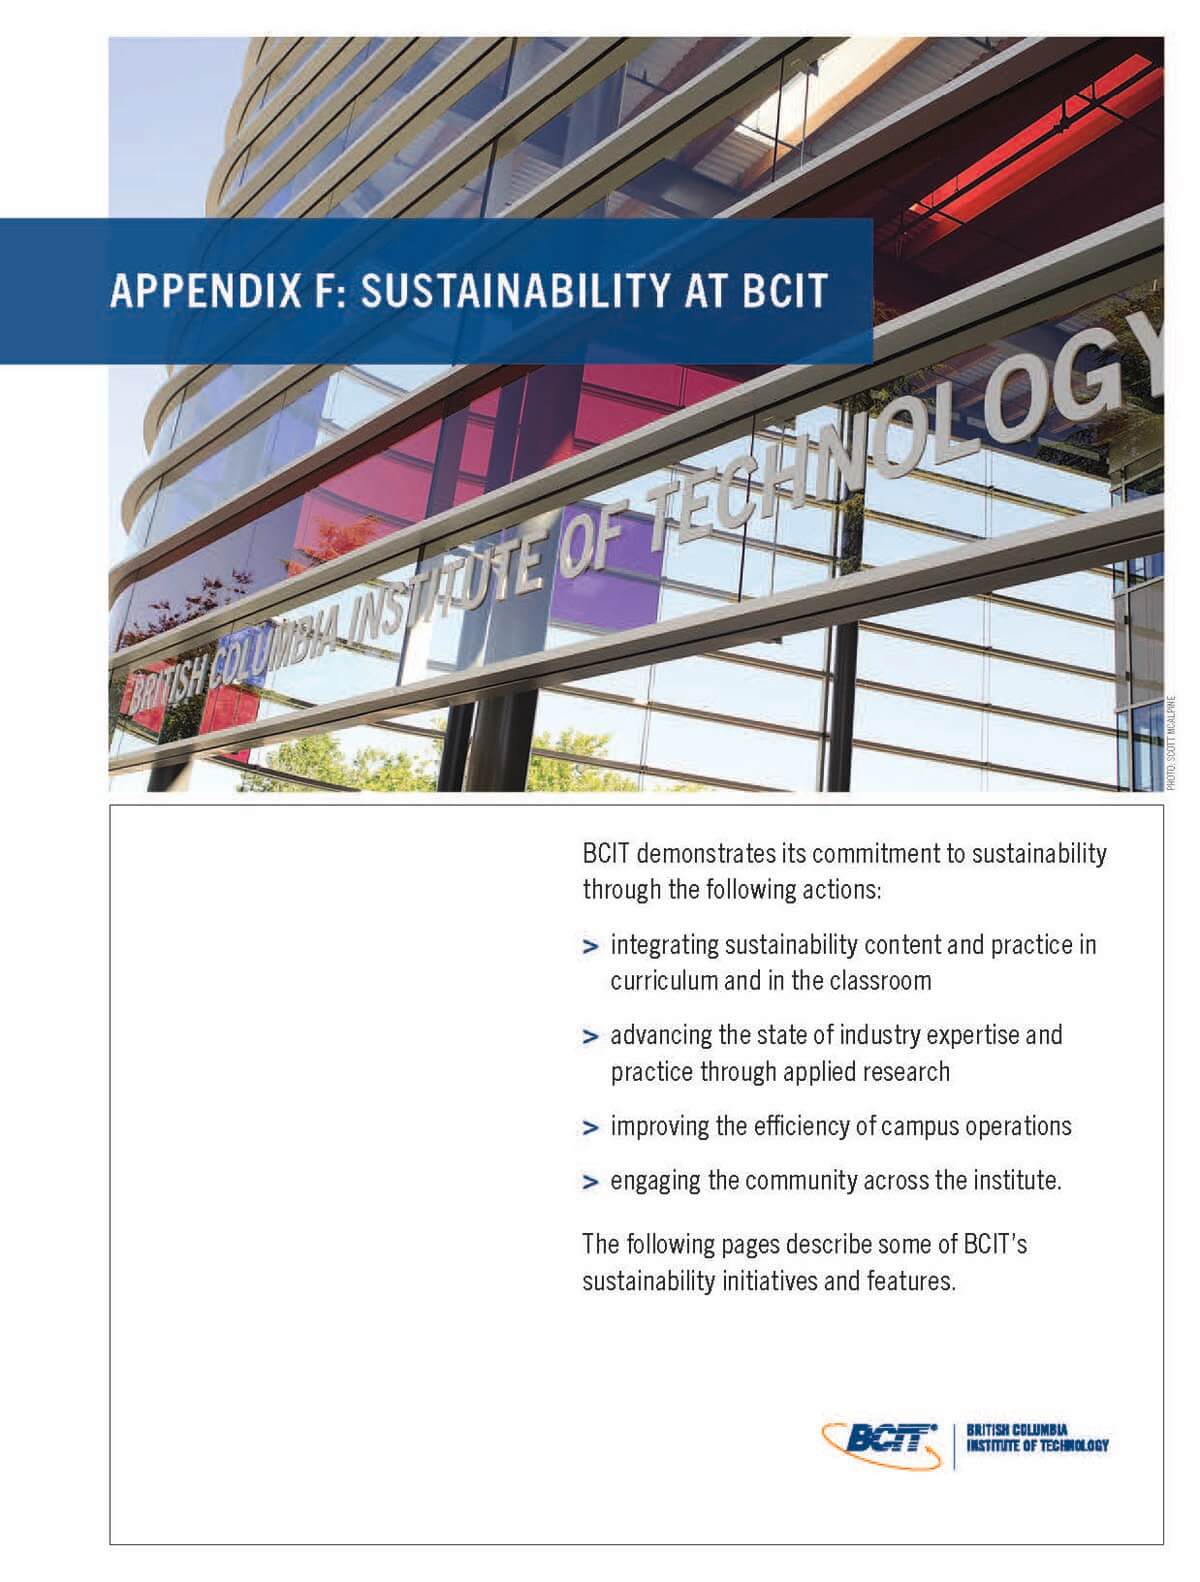 BCIT_Sustainability Appendix